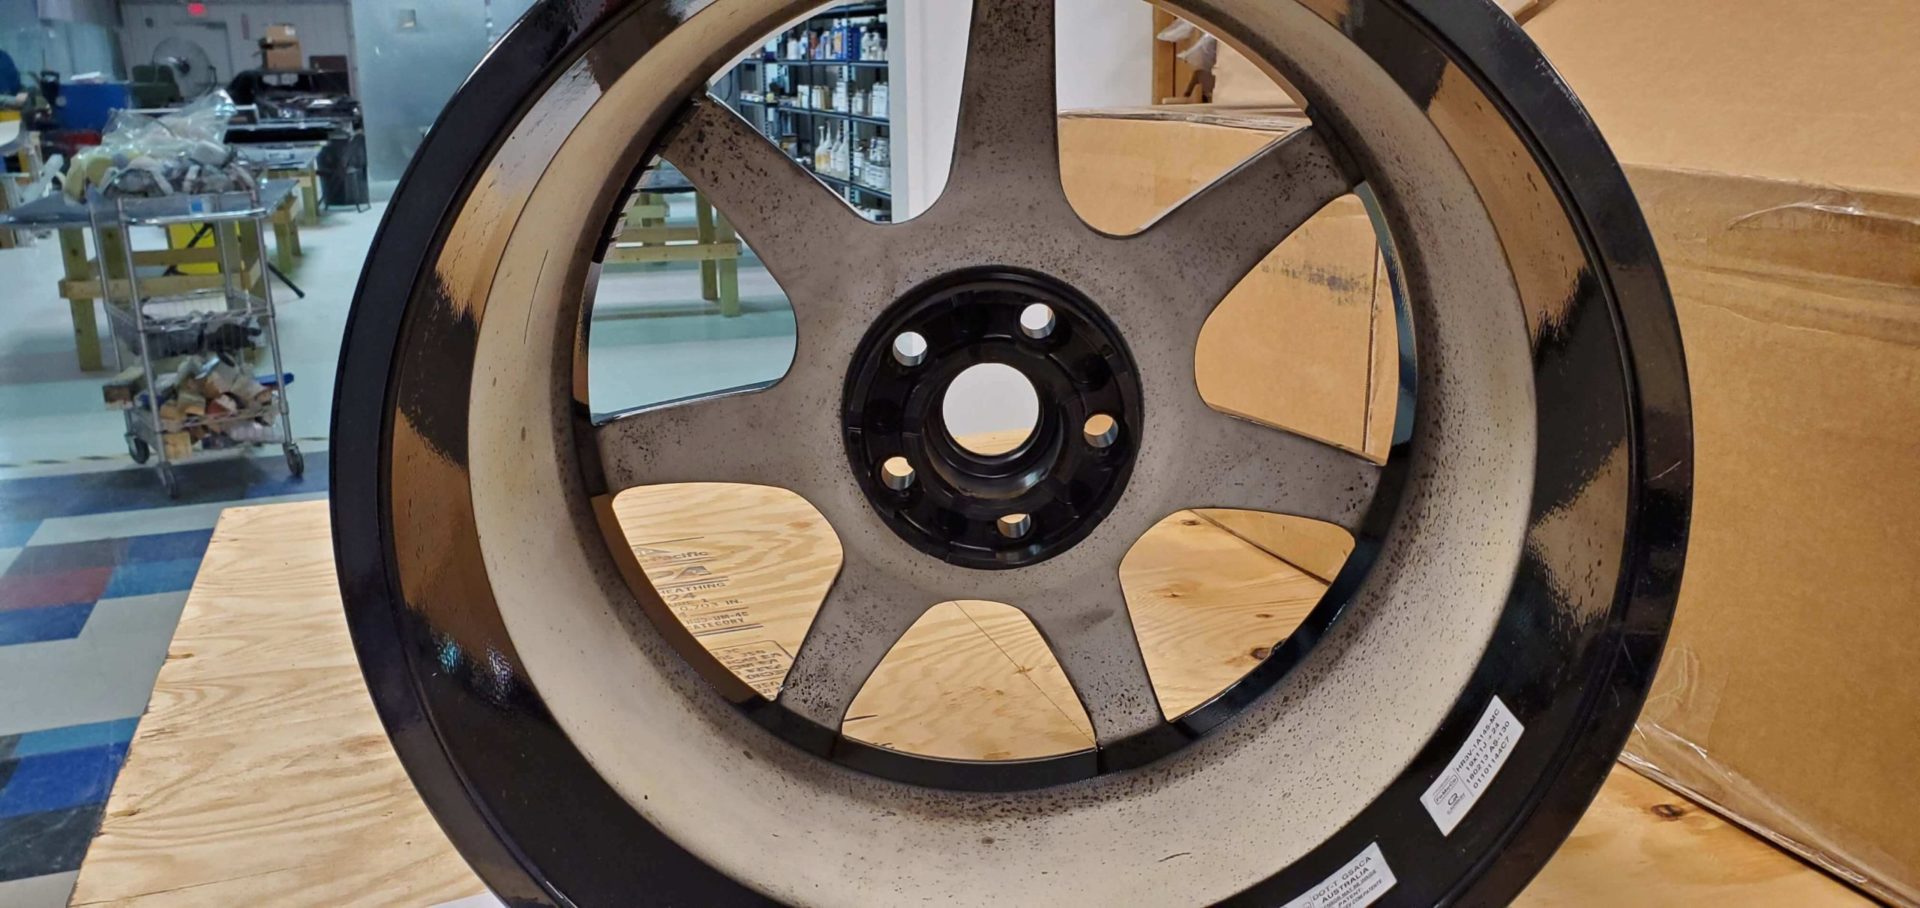 gt350r carbon fiber wheel